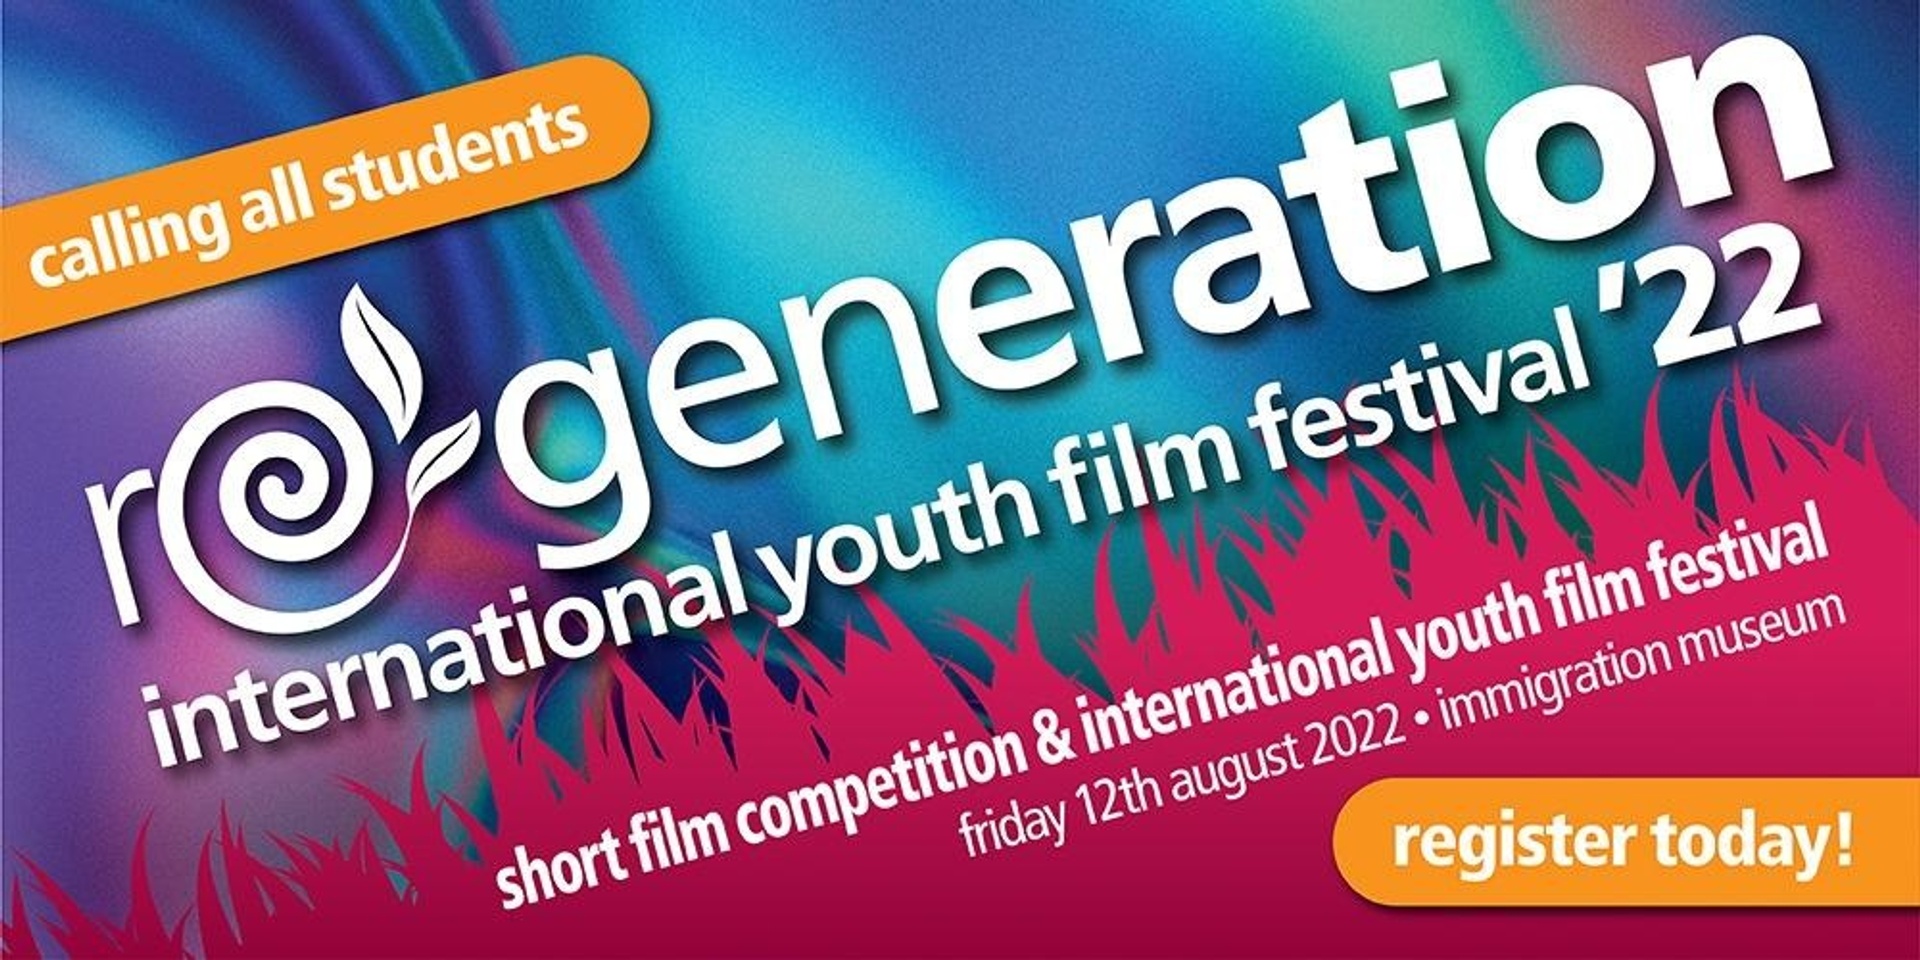  re-generation international youth film festival 22